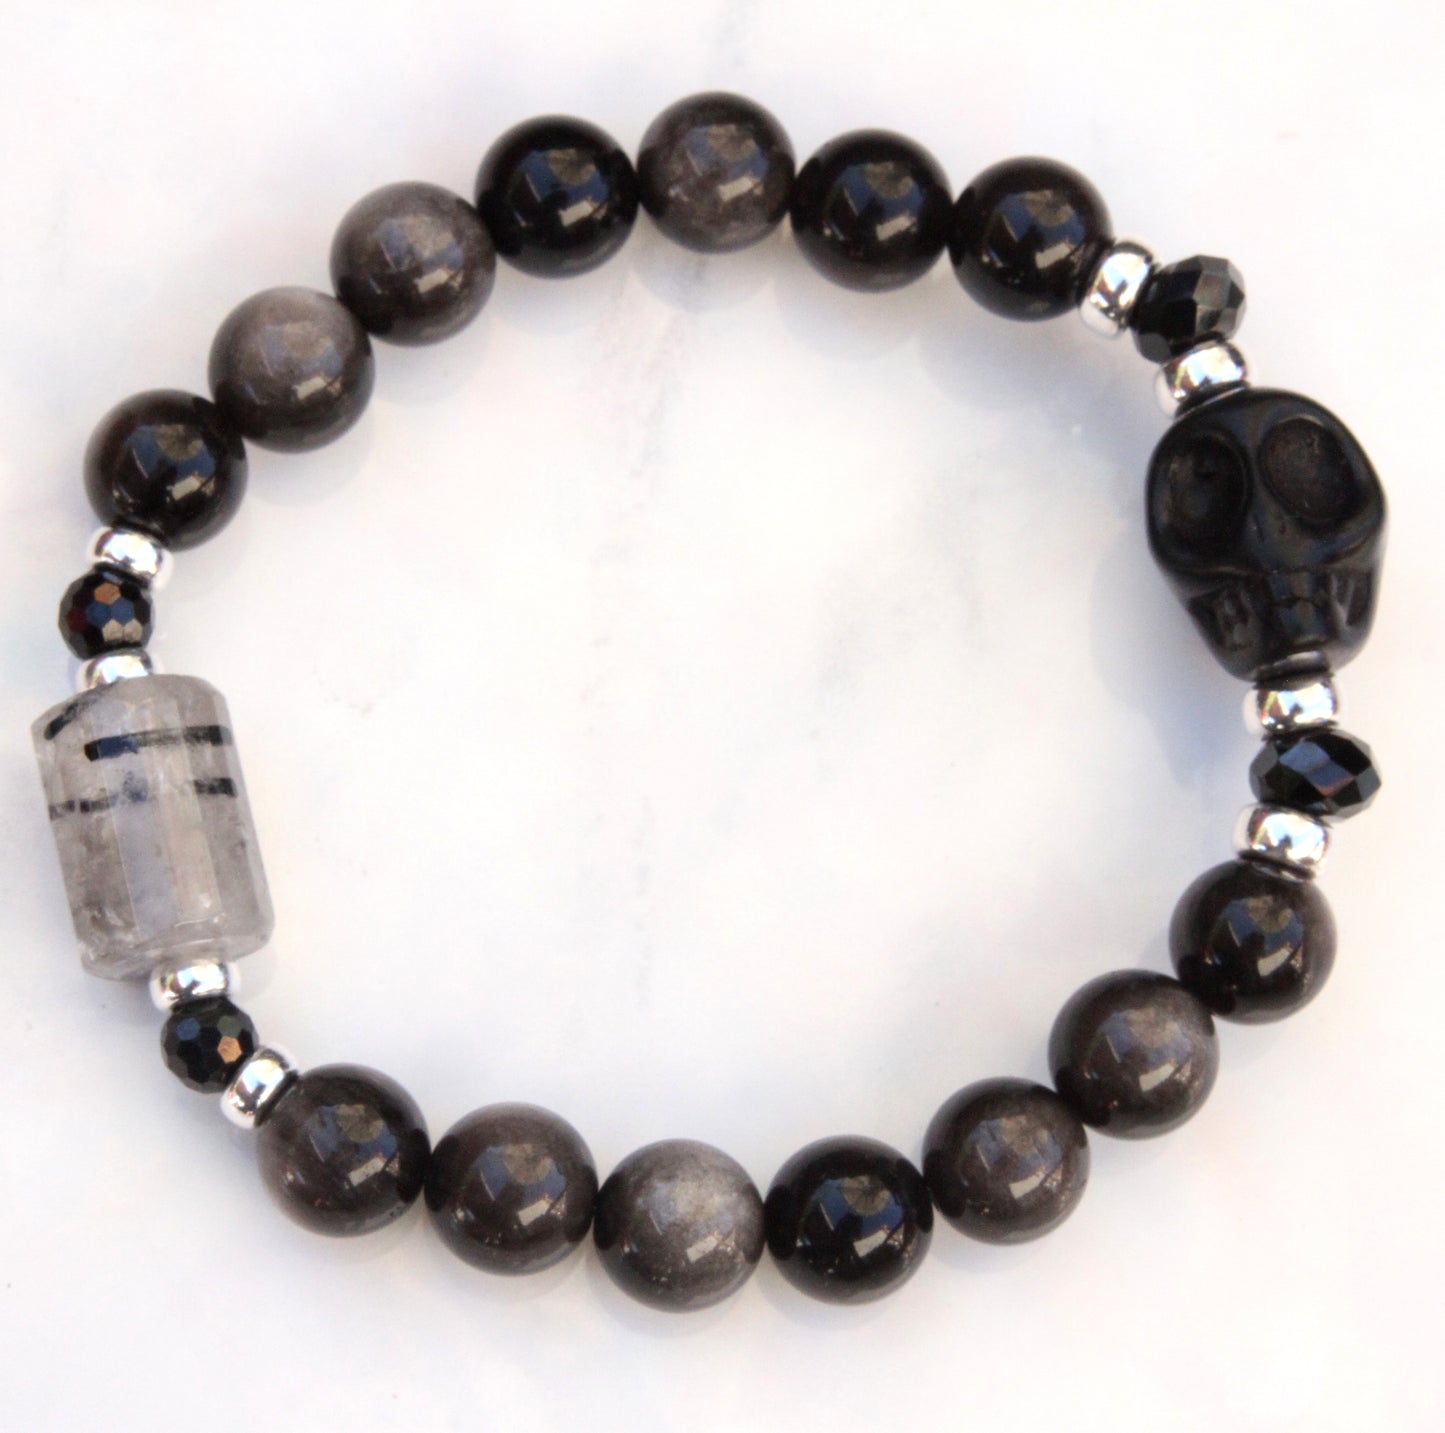 Silver Obsidian, Black Spinel gemstone, Sterling Silver, Howlite Skull, and Tourmaline Quartz Bracelet